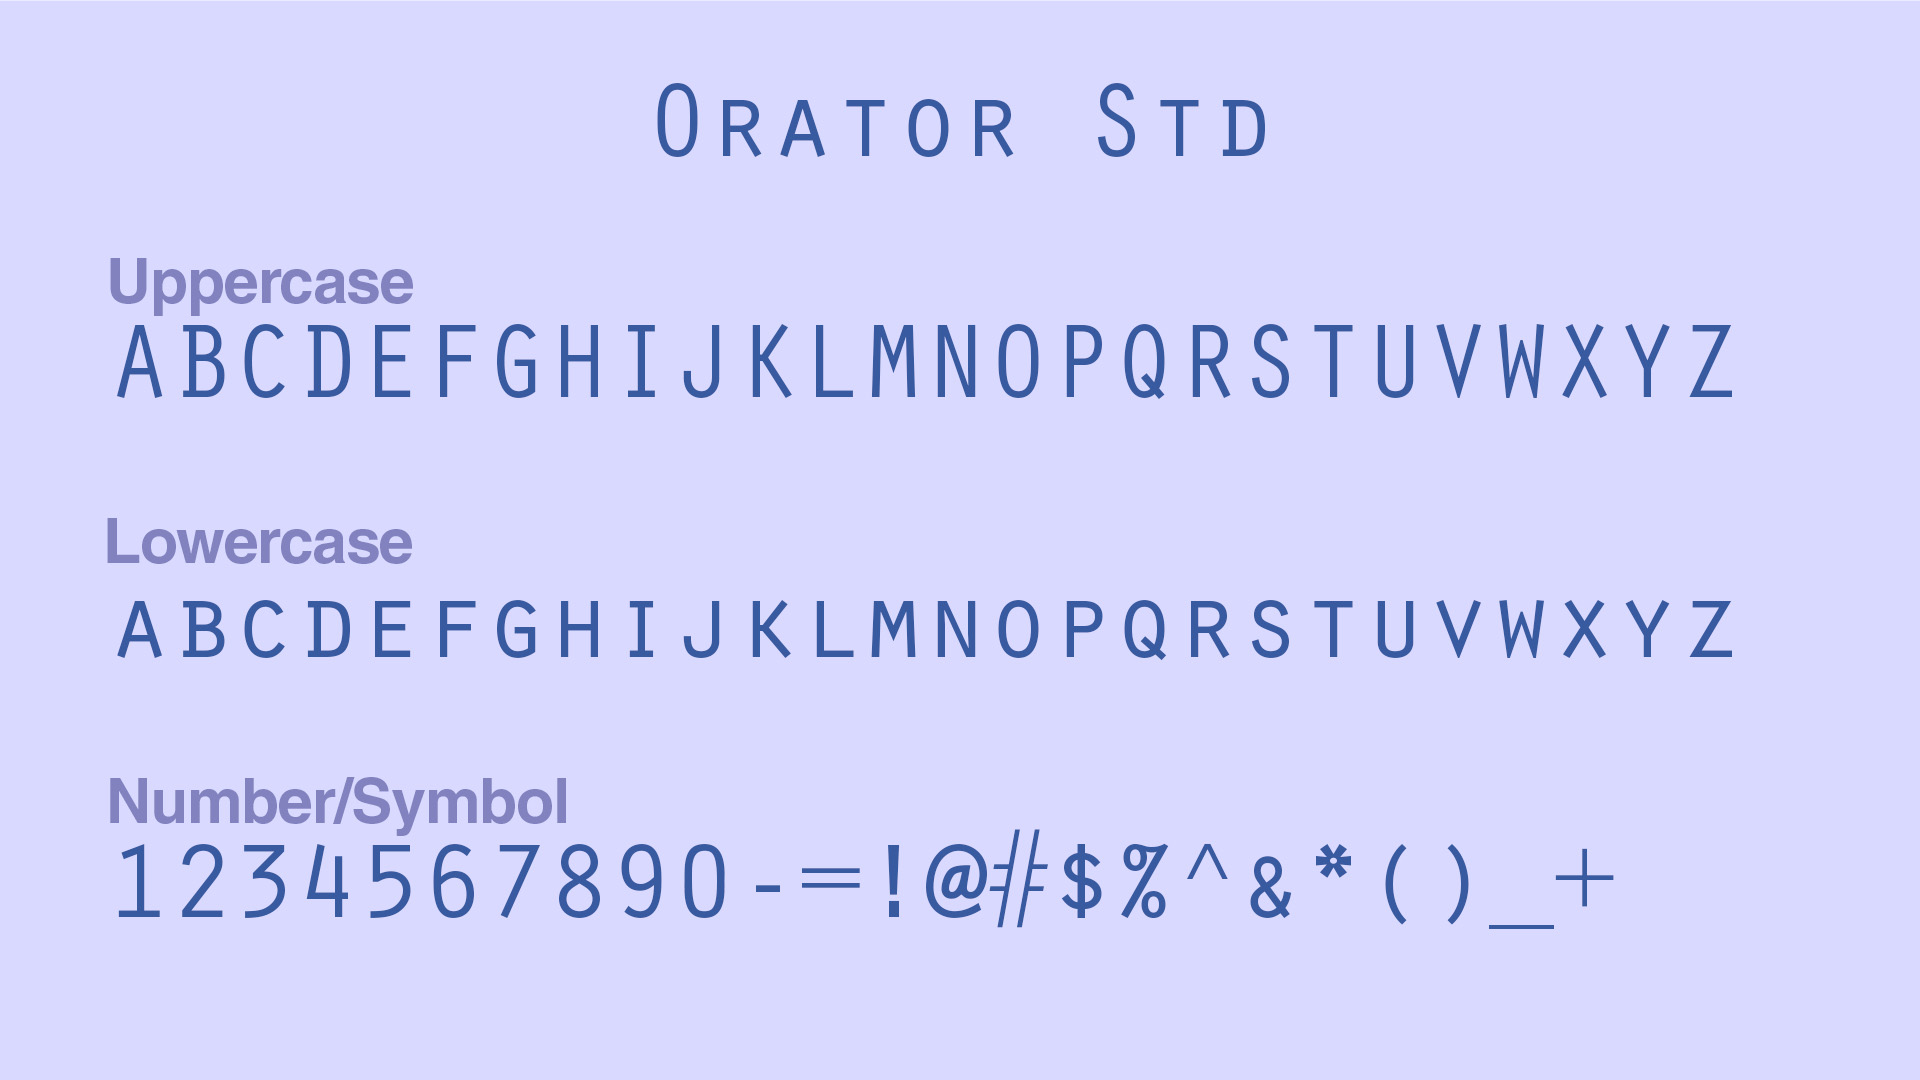 Complete Orator STD font family in dark blue on a light blue background.